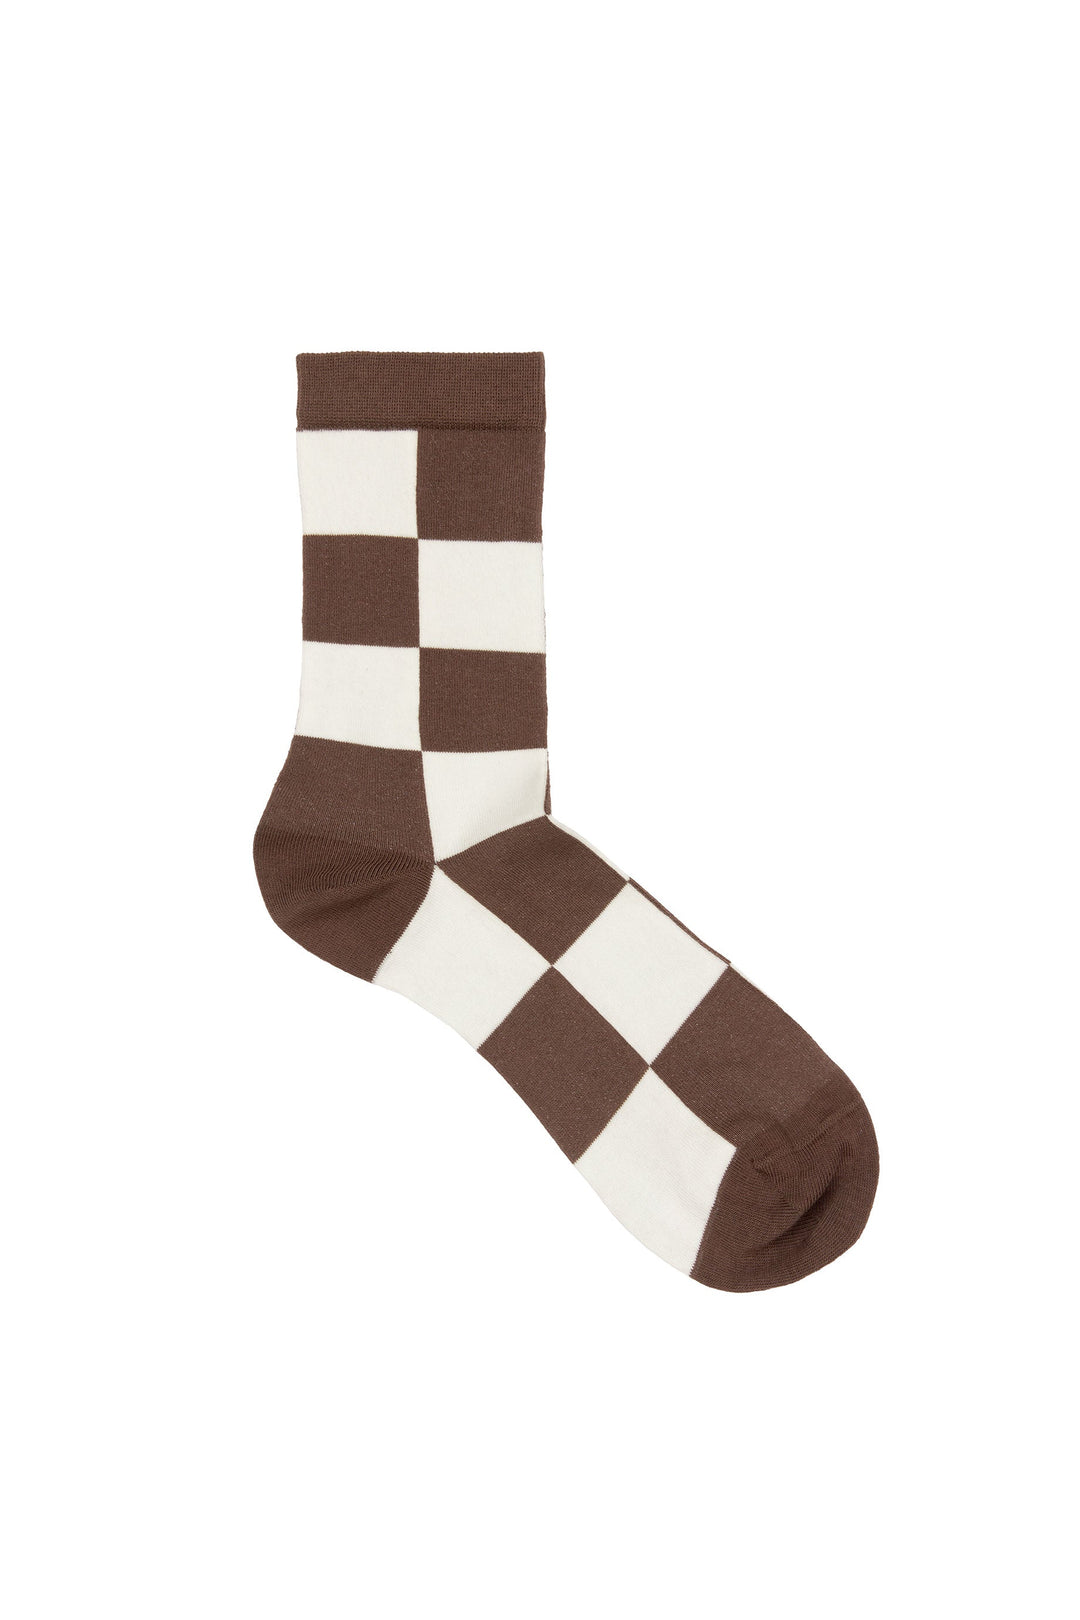 Stine Goya Iggy Socks - Chocolate